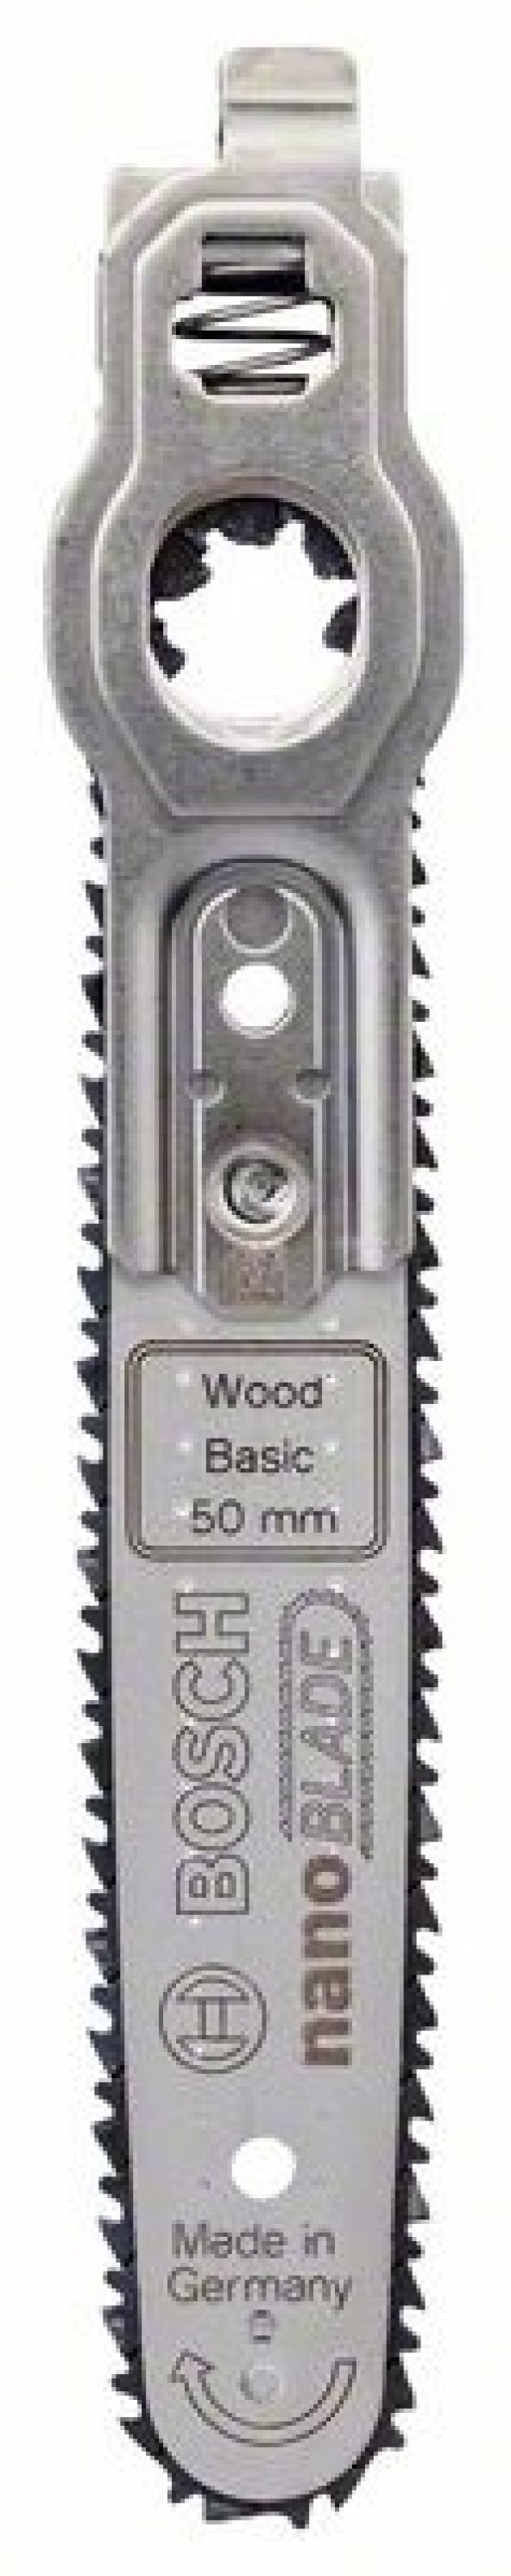 Bosch EasyCut 50 (12) Dekupaj Testere Yedek Bıçak 52 mm -2.609.256.D83